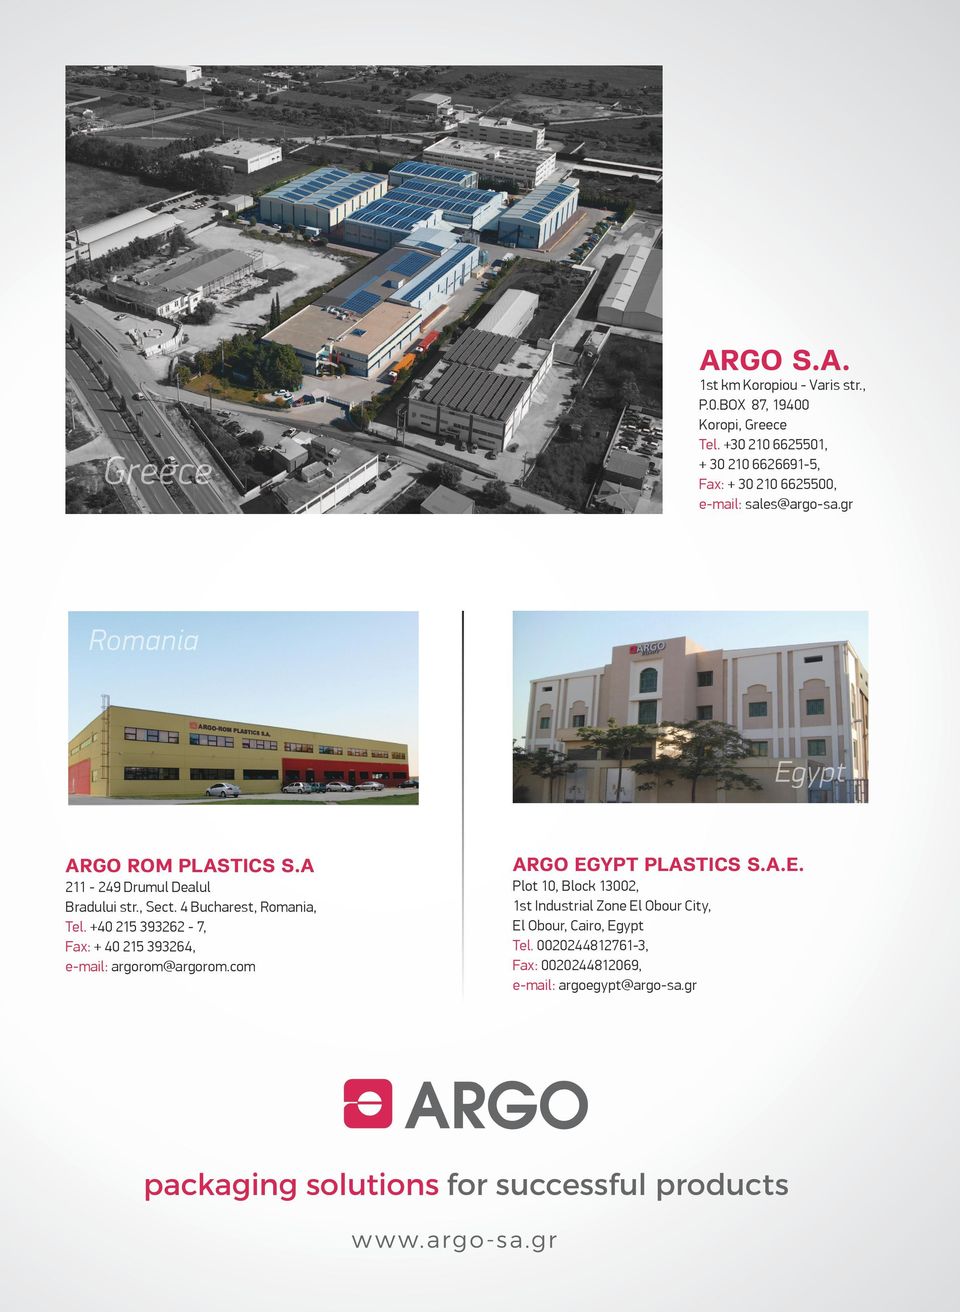 A Plot 10, Block 13002, 1st Industrial Zone El Obour City, El Obour, Cairo, Egypt Tel. 0020244812761-3, Fax: 0020244812069, e-mail: argoegypt@argo-sa.